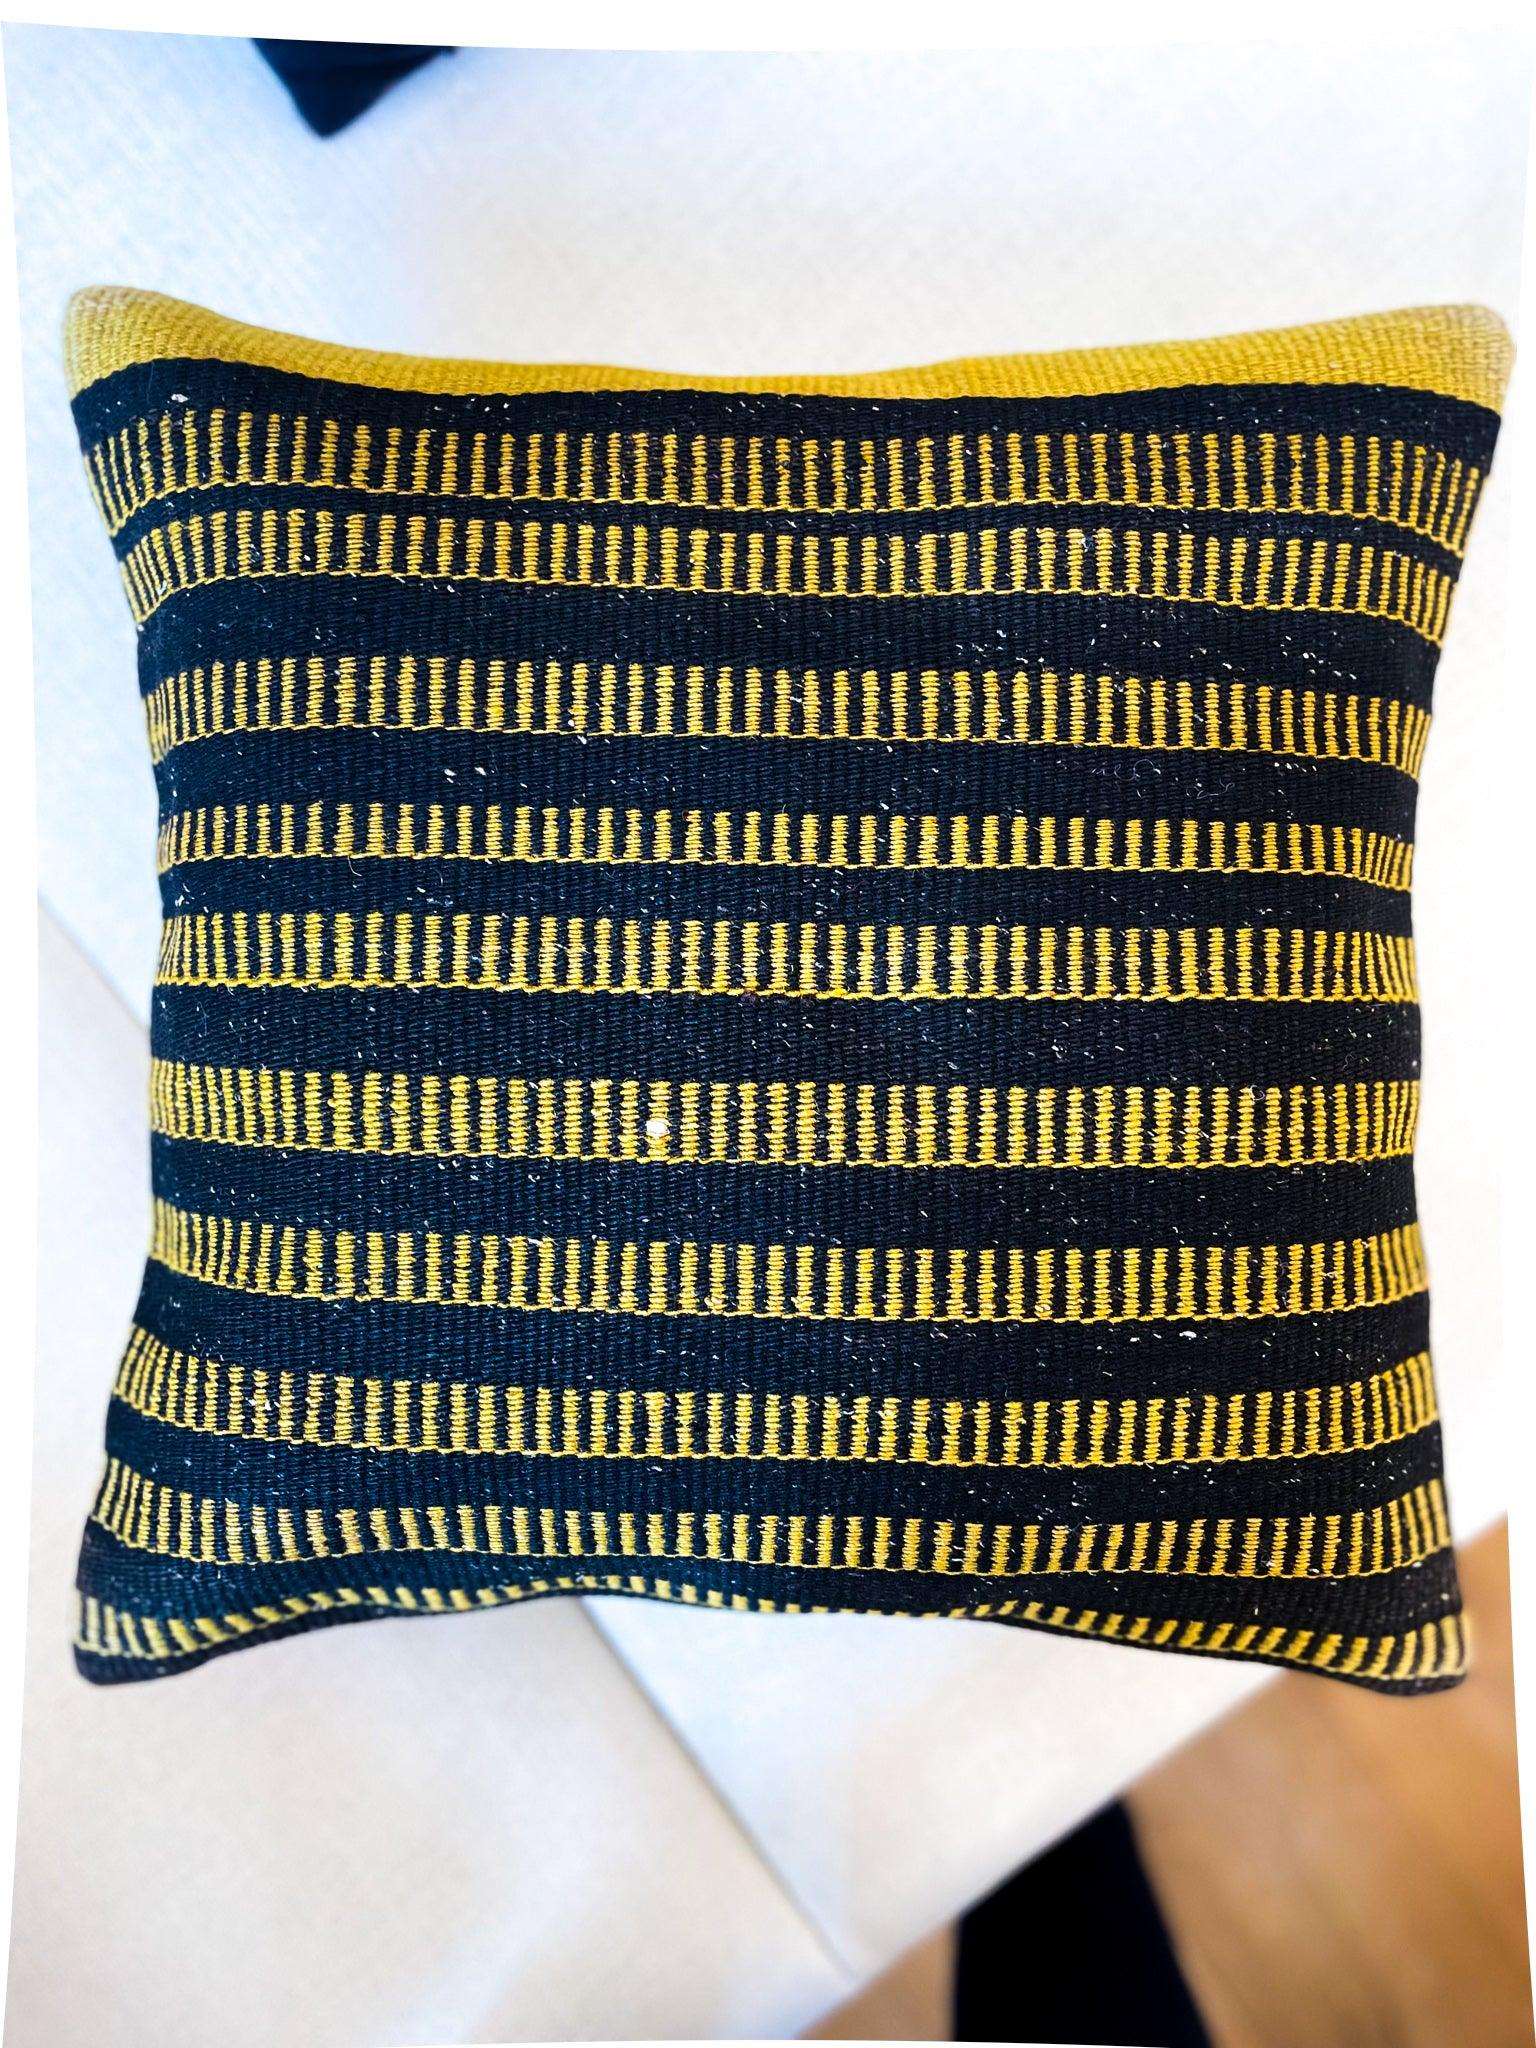 Vintage Kilim Cushion Cover 40 x 40cm (16 x 16') - BeachPerfect.de